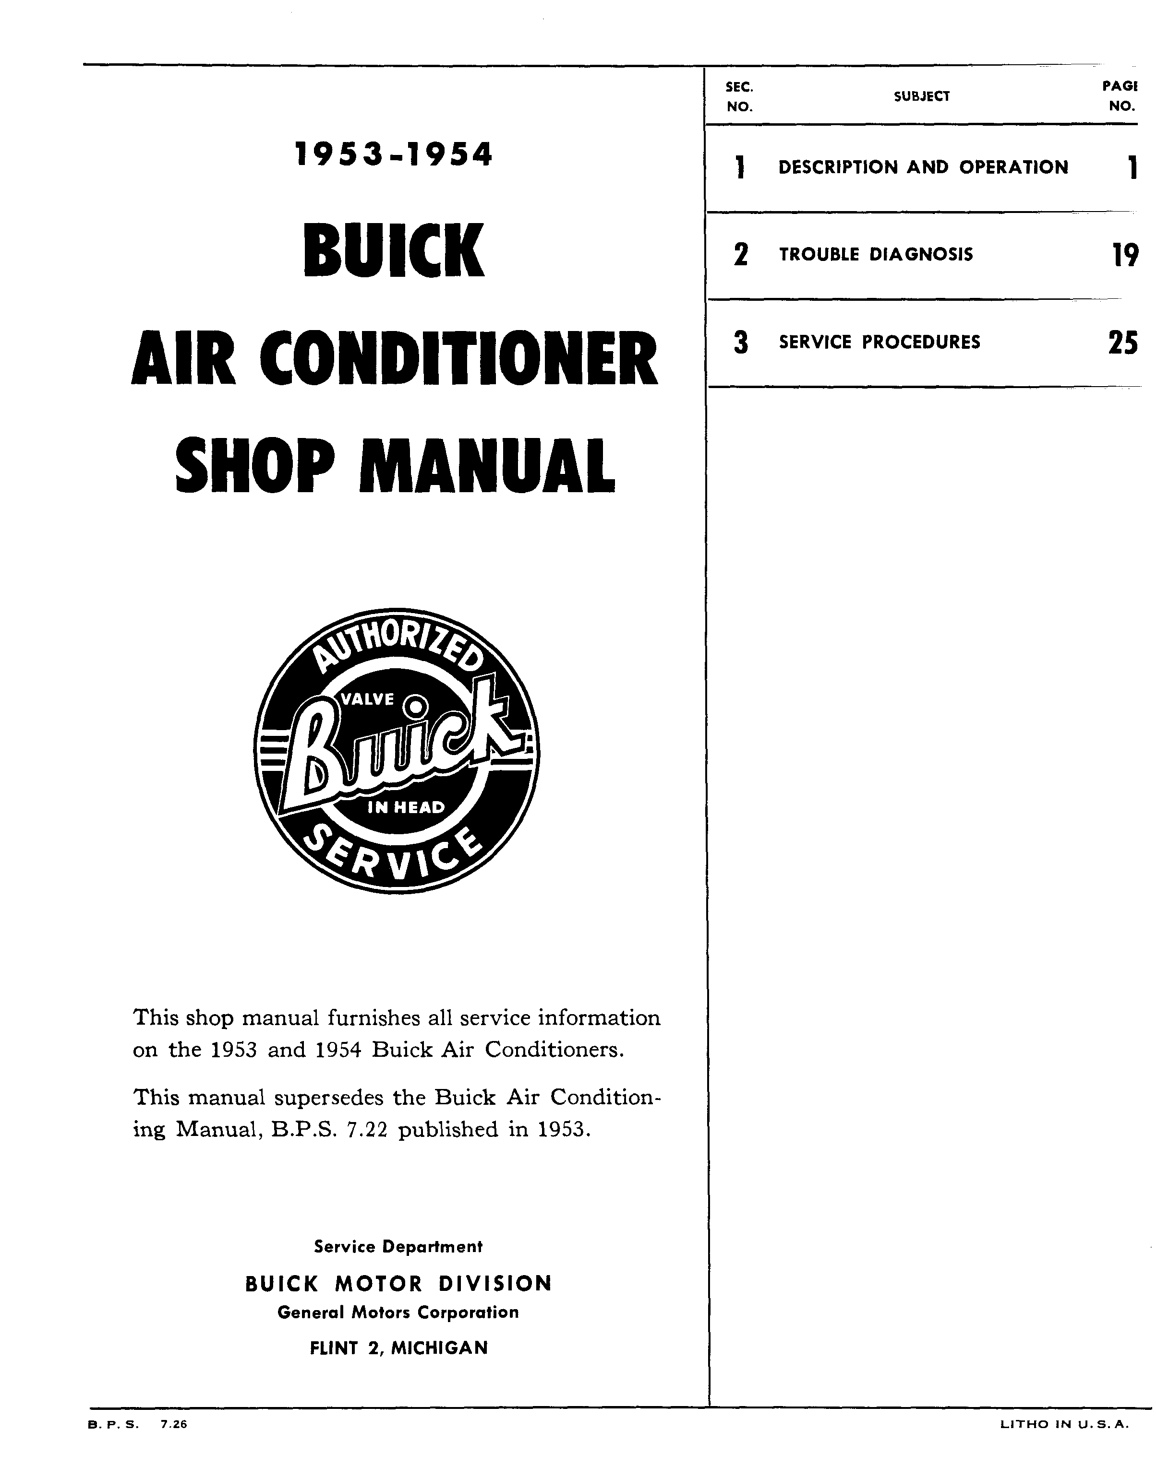 n_16 1954 Buick Shop Manual - Air Conditioner-002-002.jpg